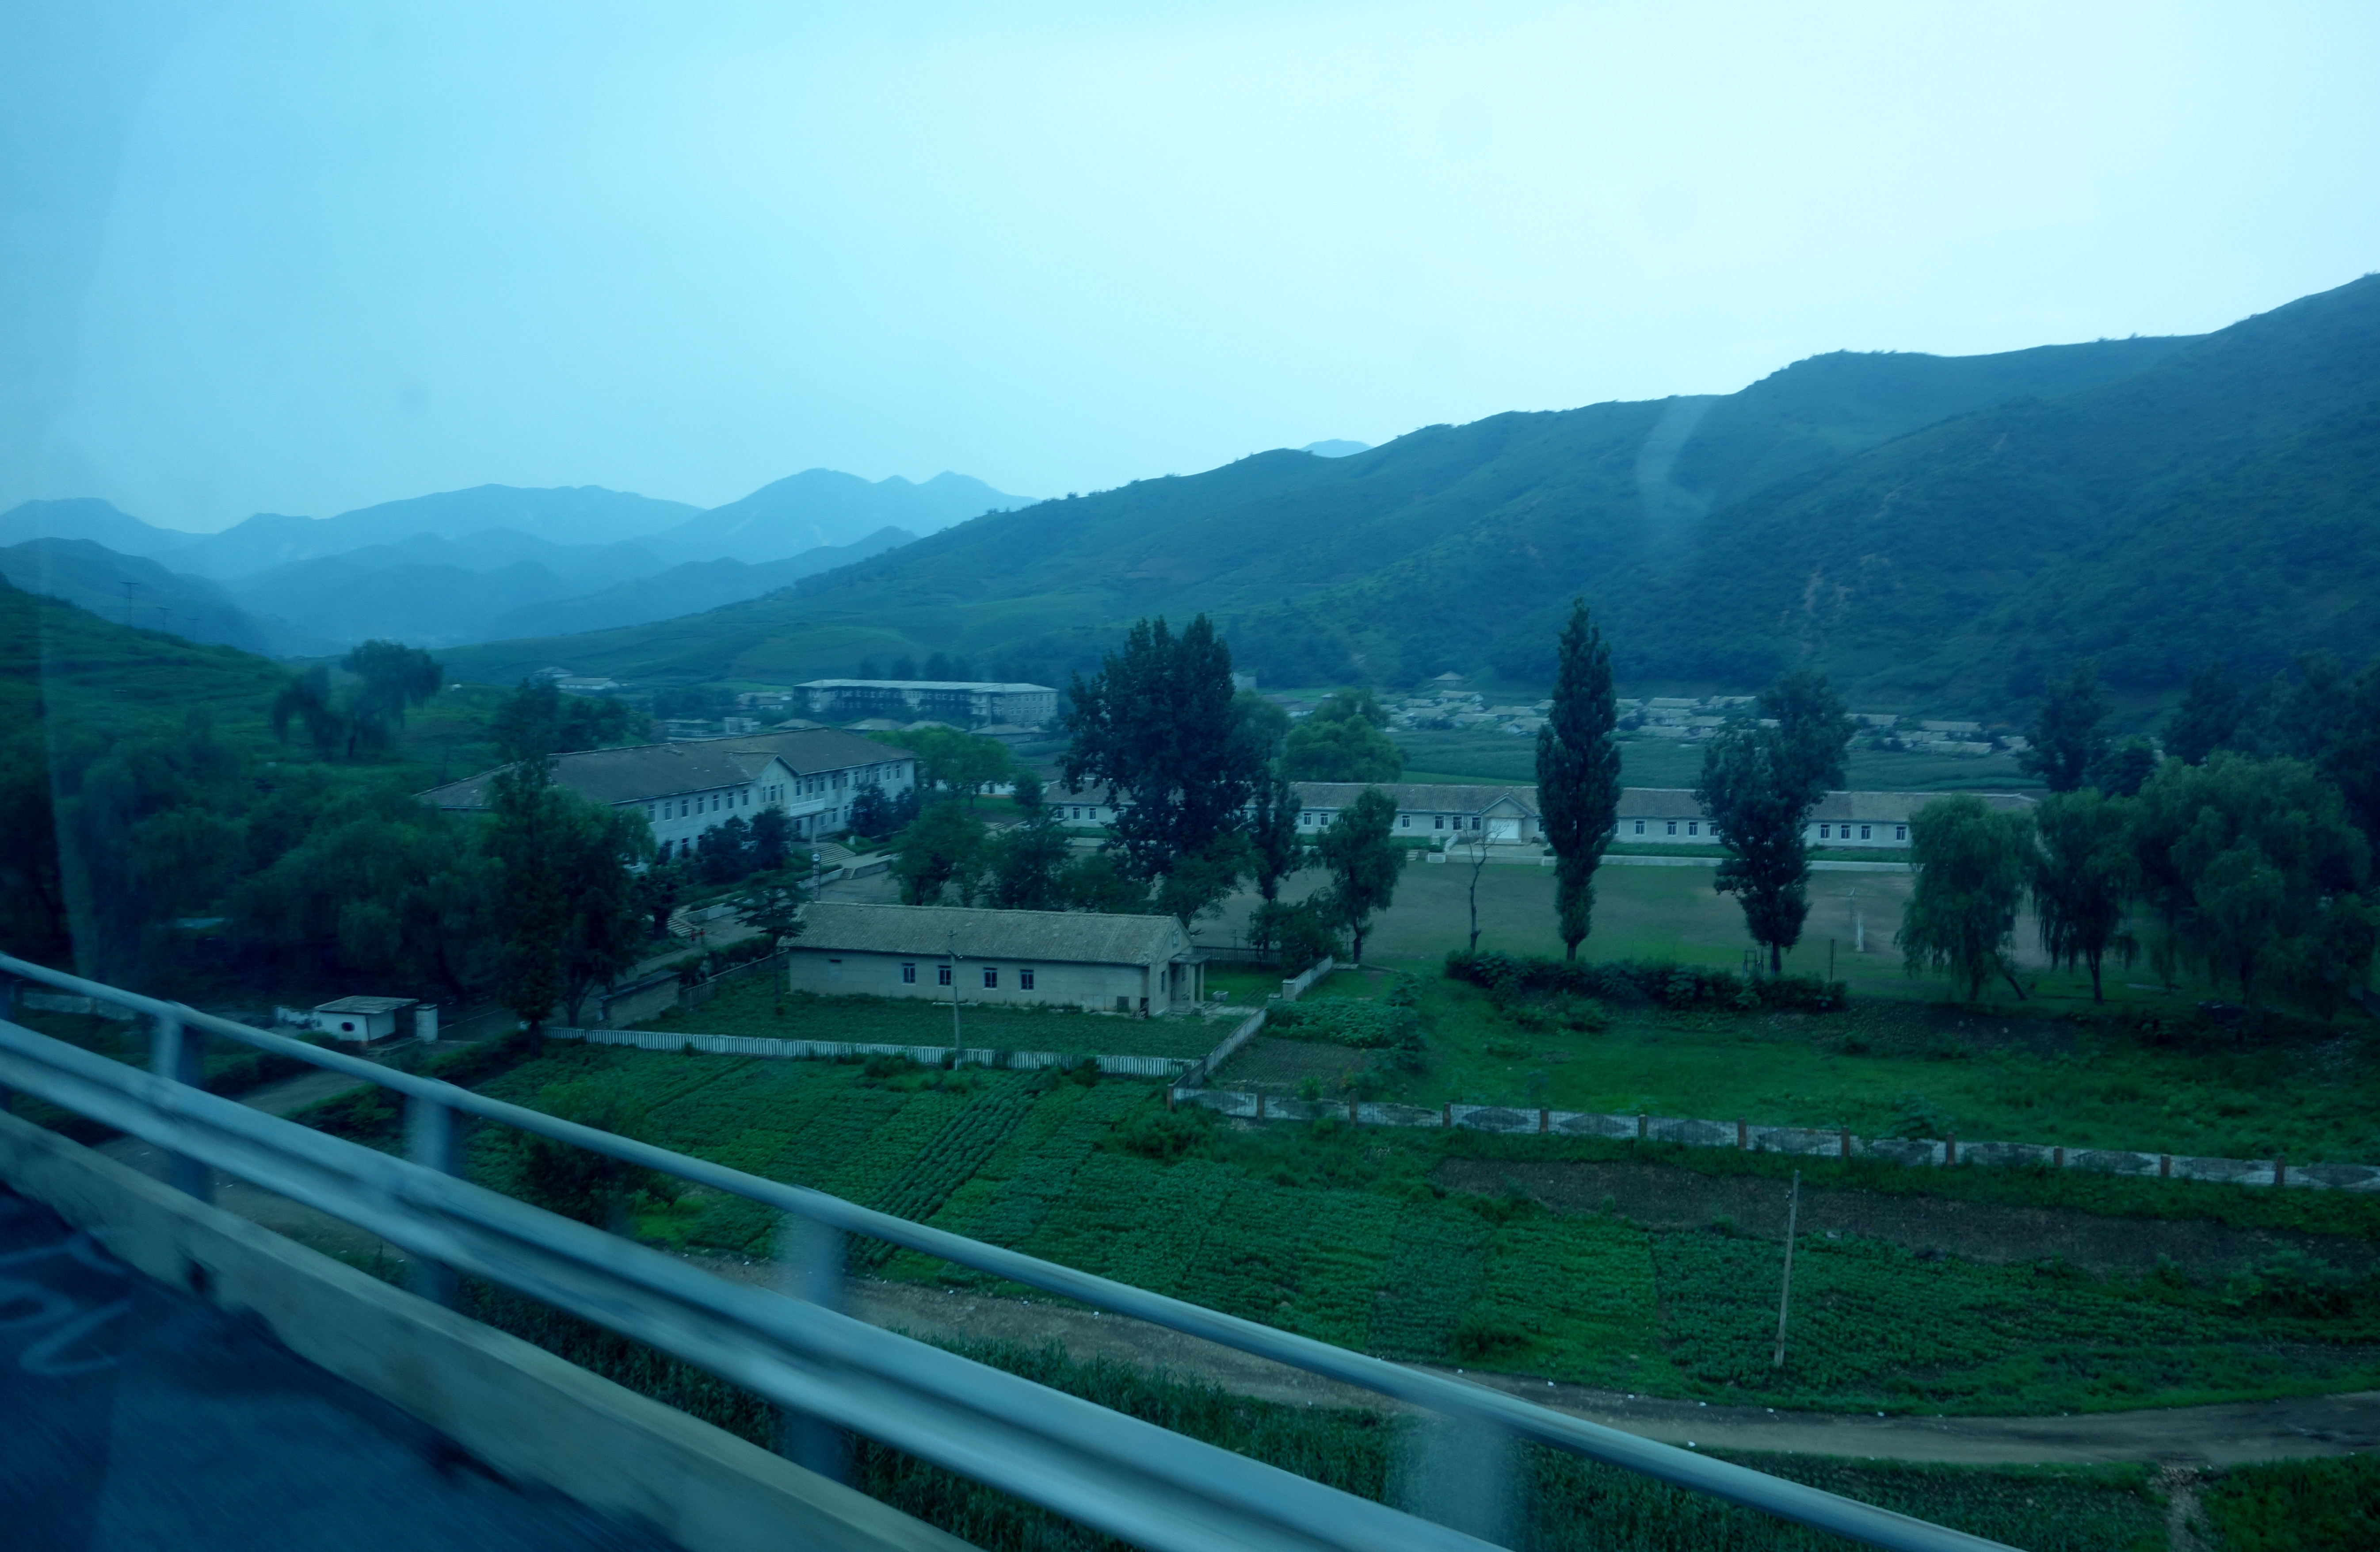 Best ideas about North Korea Landscape
. Save or Pin Landscapes North Korea Now.